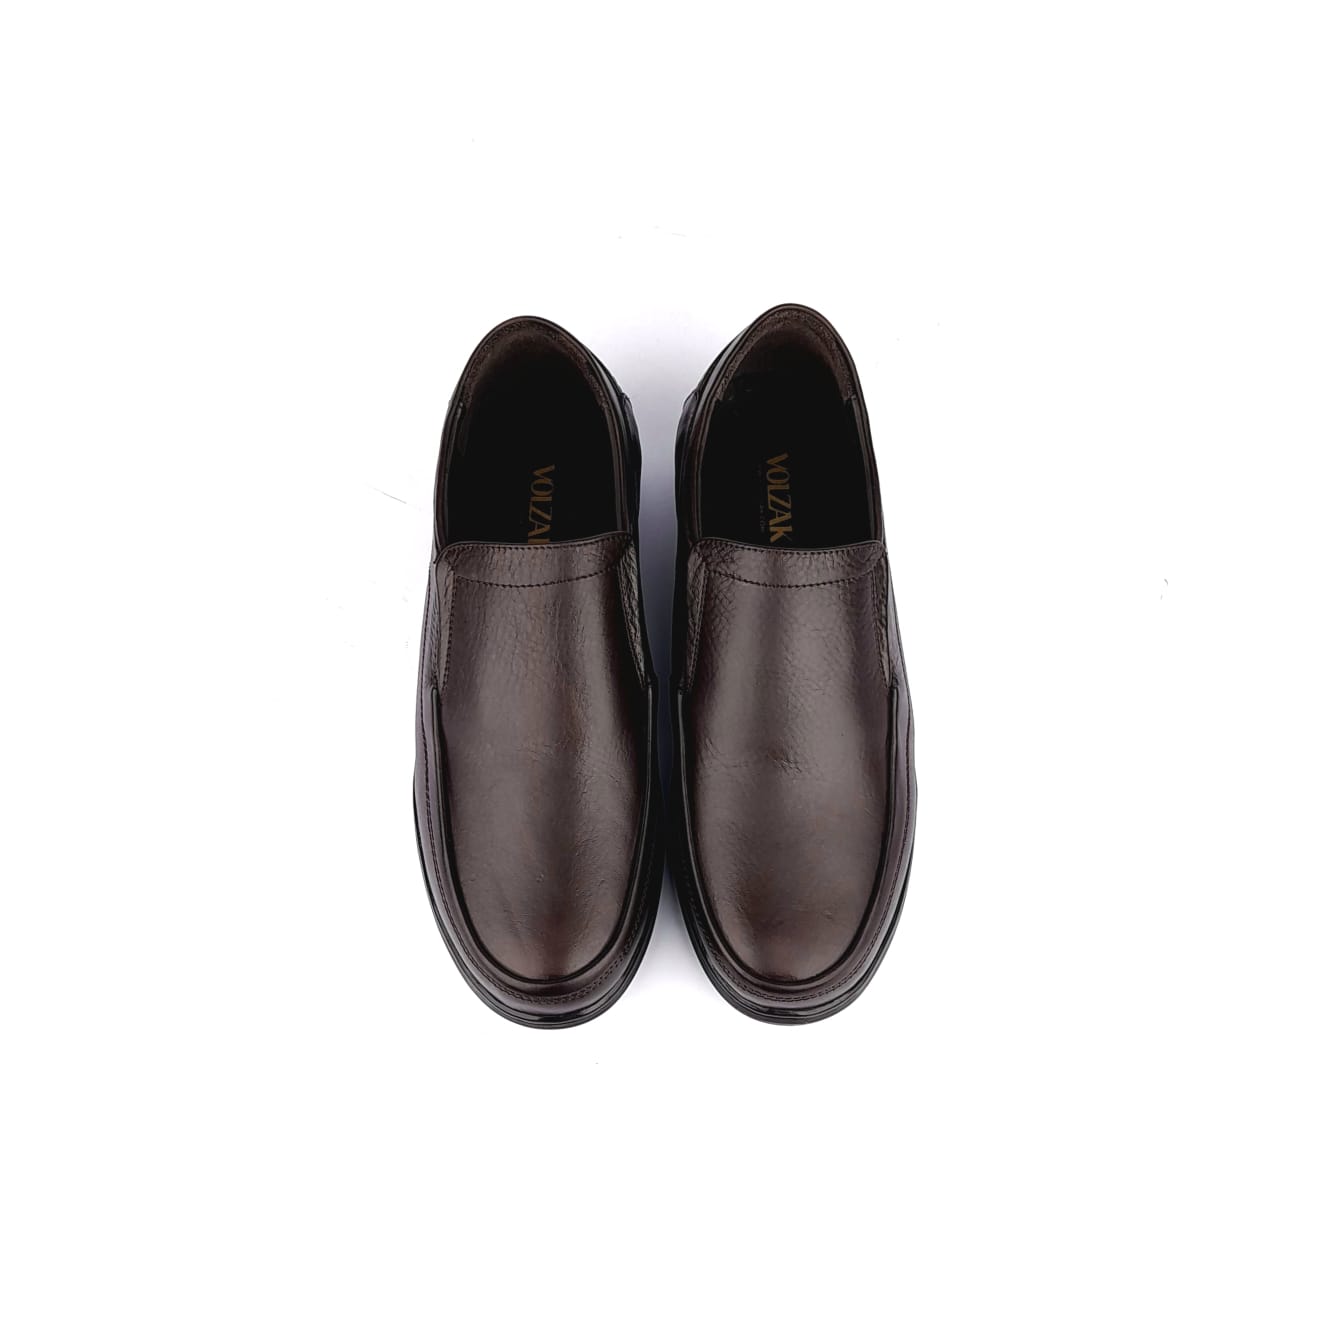 2041 S Chaussure en cuir marron